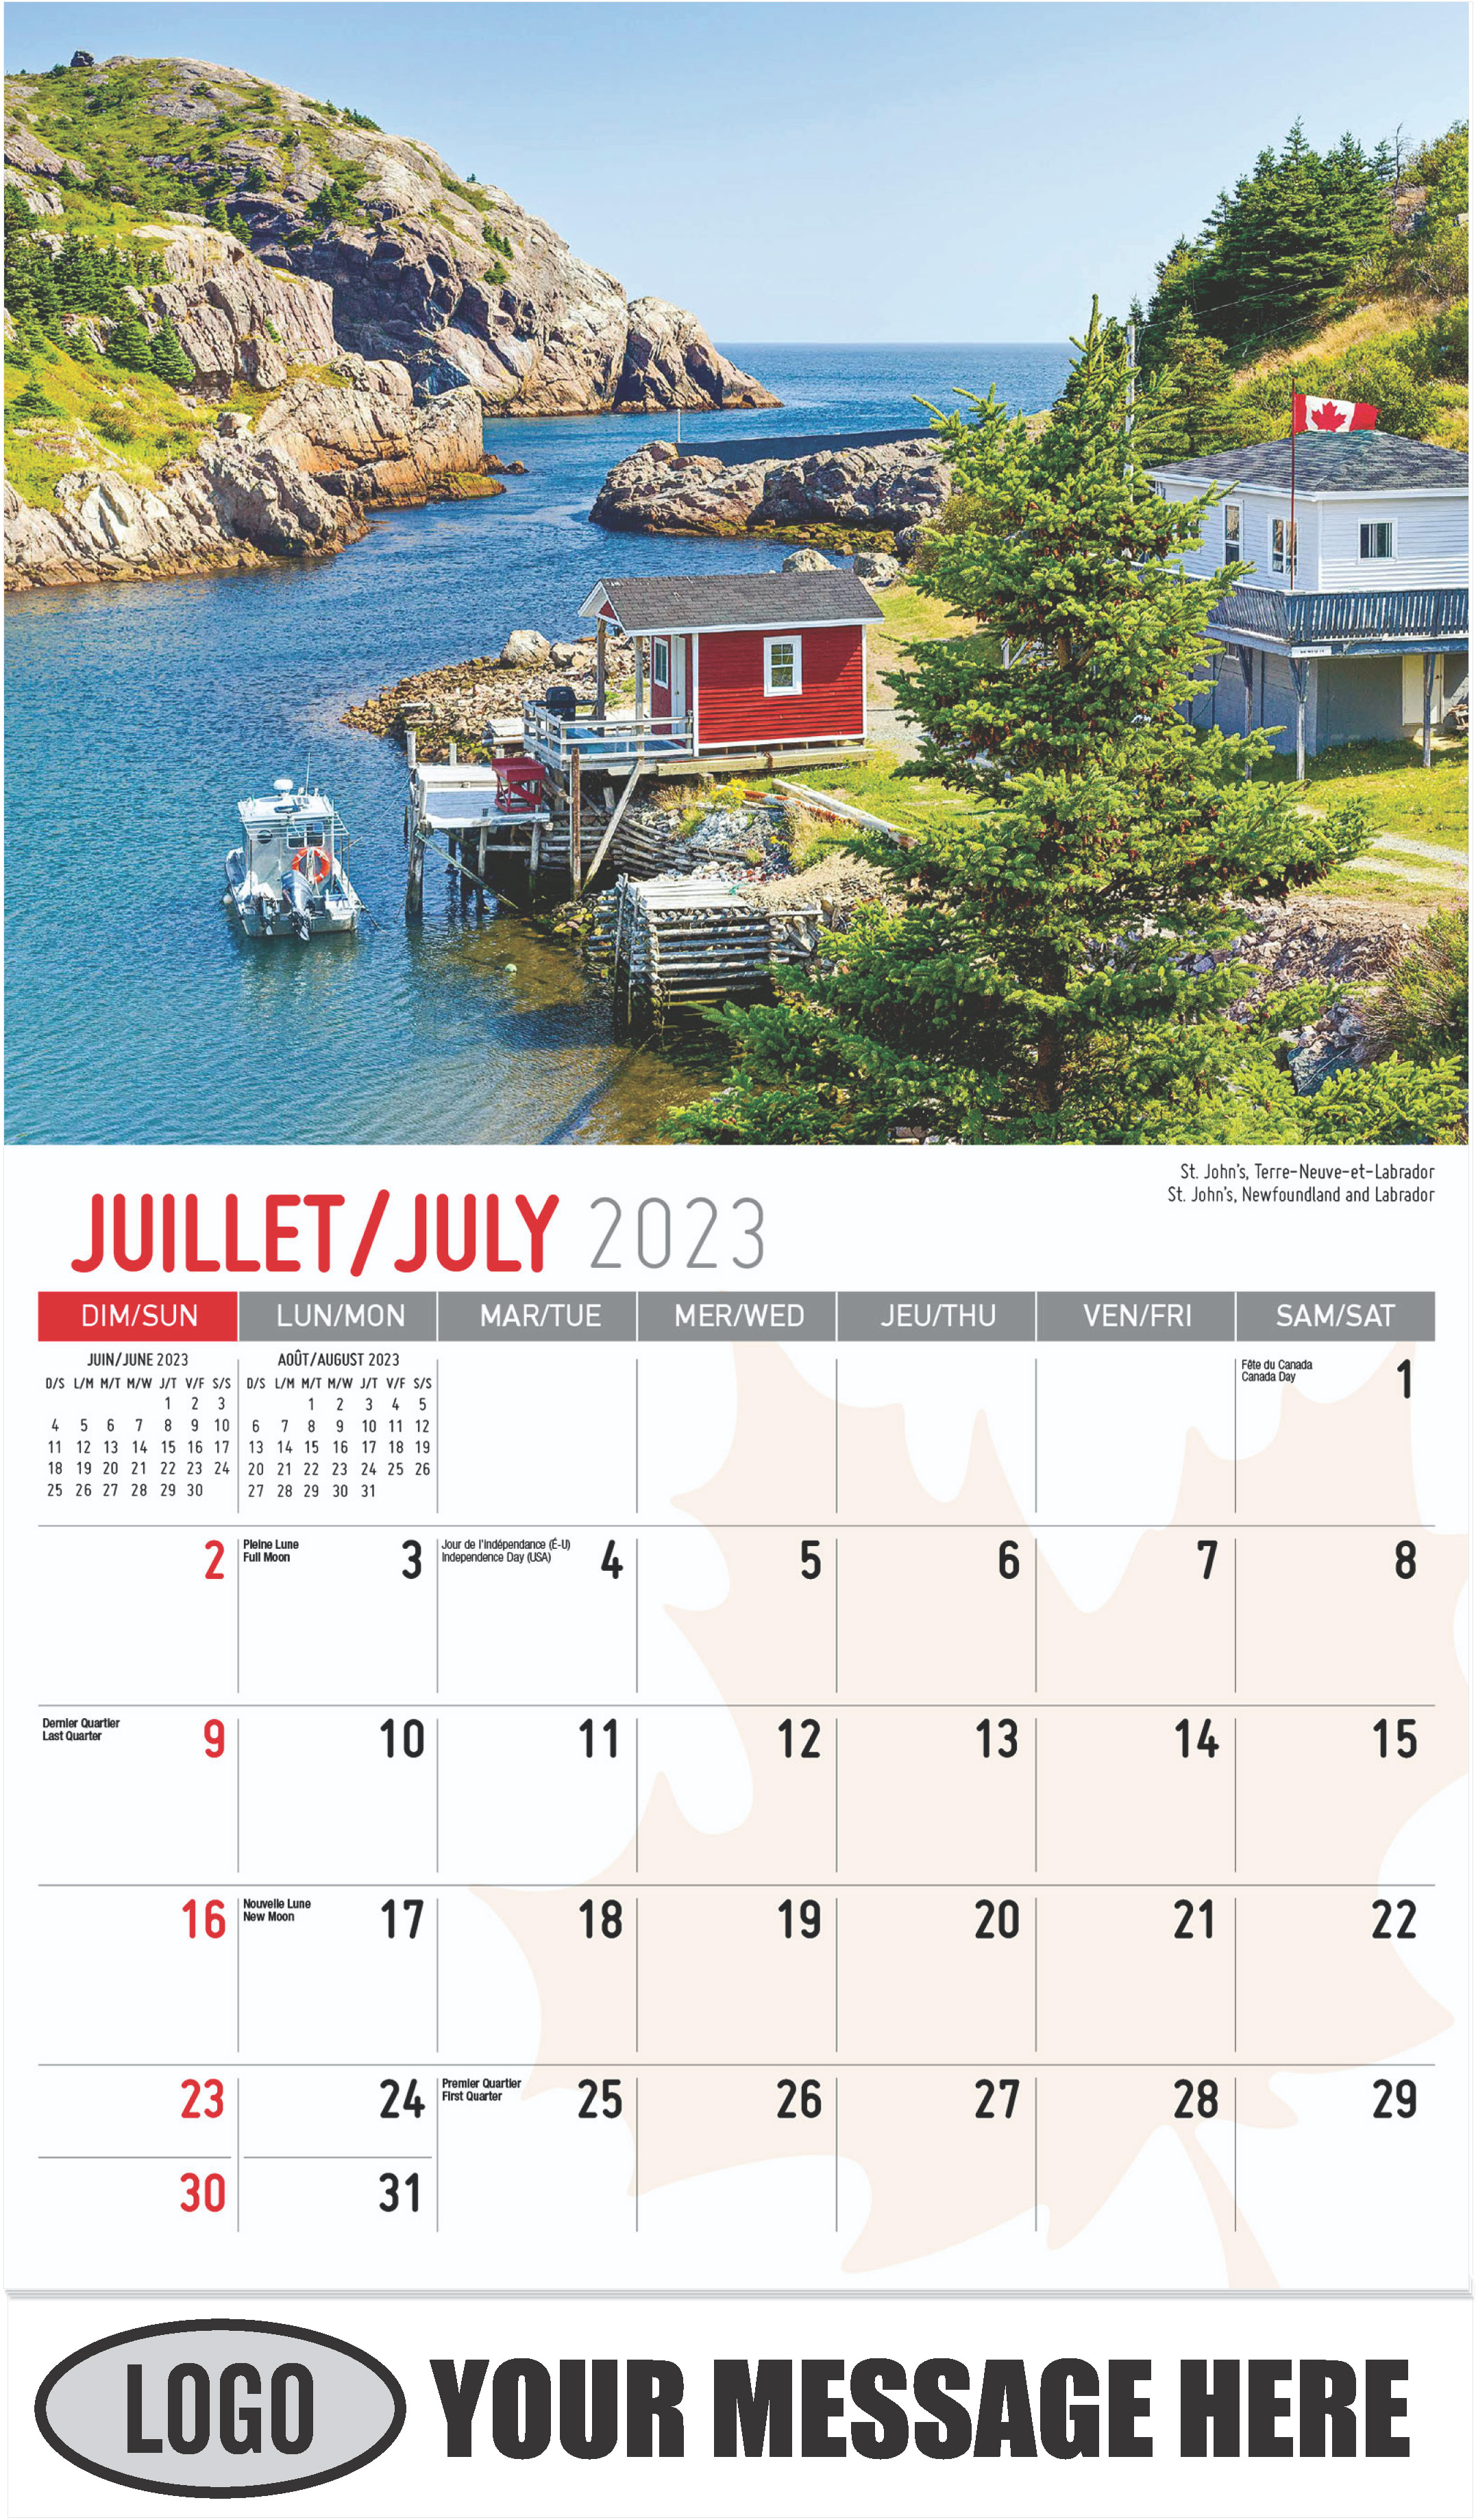 St. John's, Newfoundland - July - Scenes of Canada(French-English bilingual) 2023 Promotional Calendar